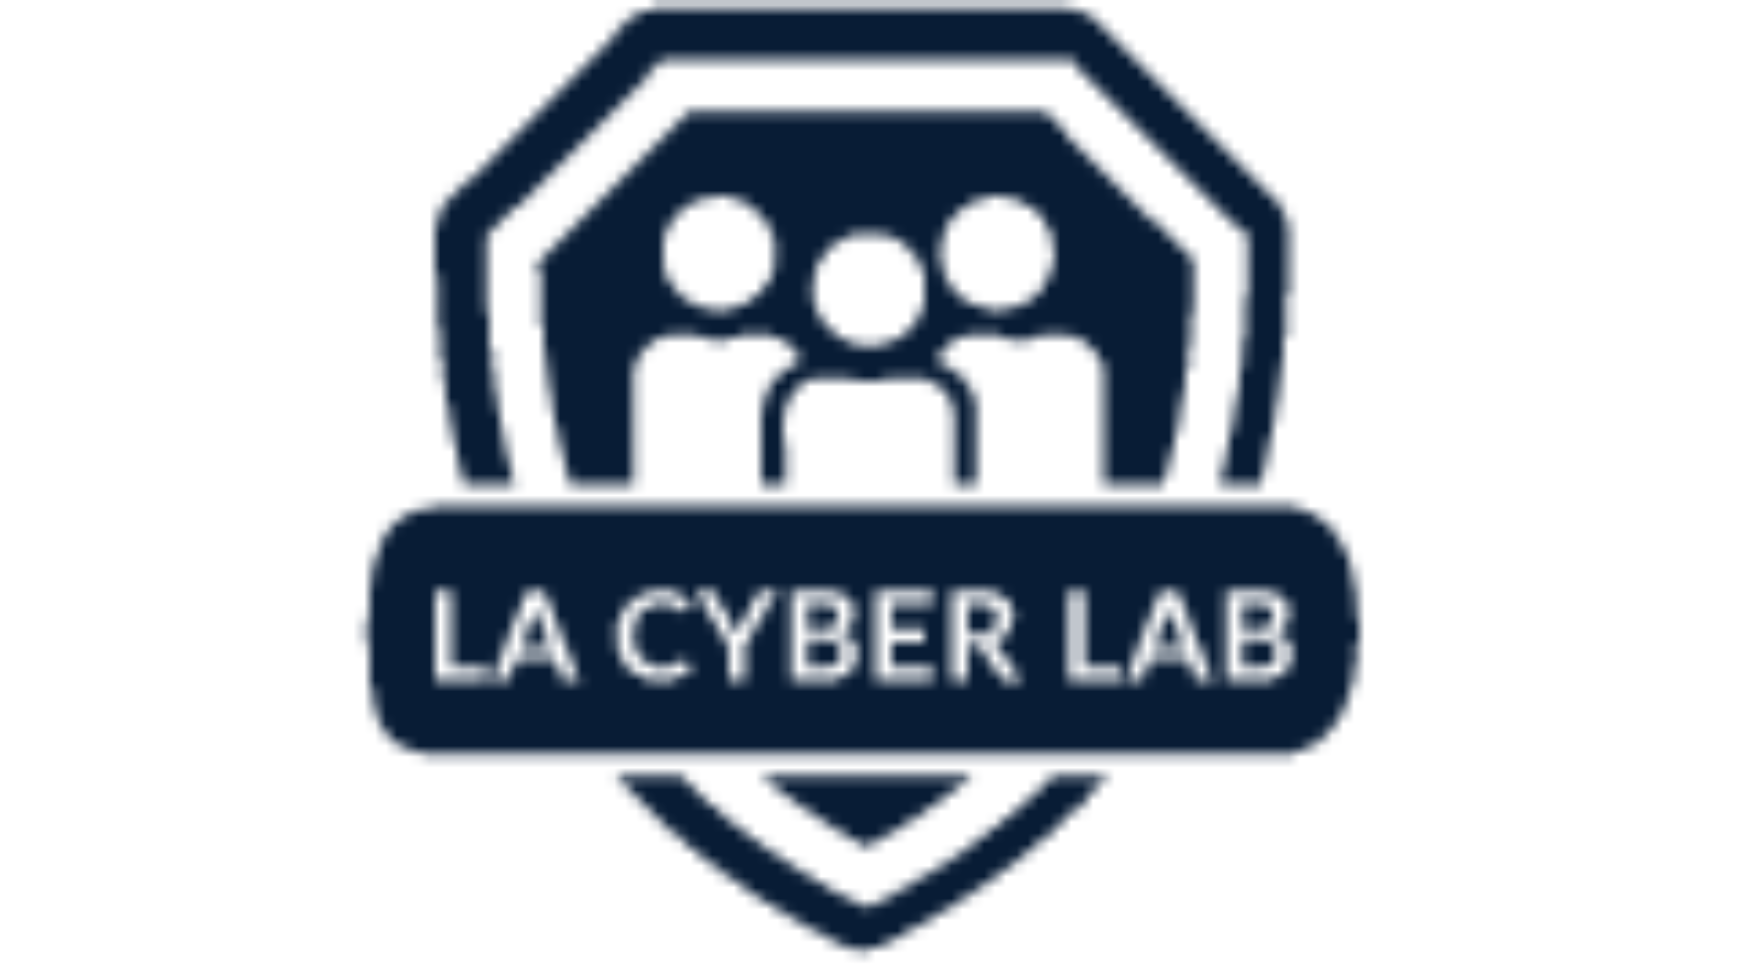 Los Angeles Cyber Lab